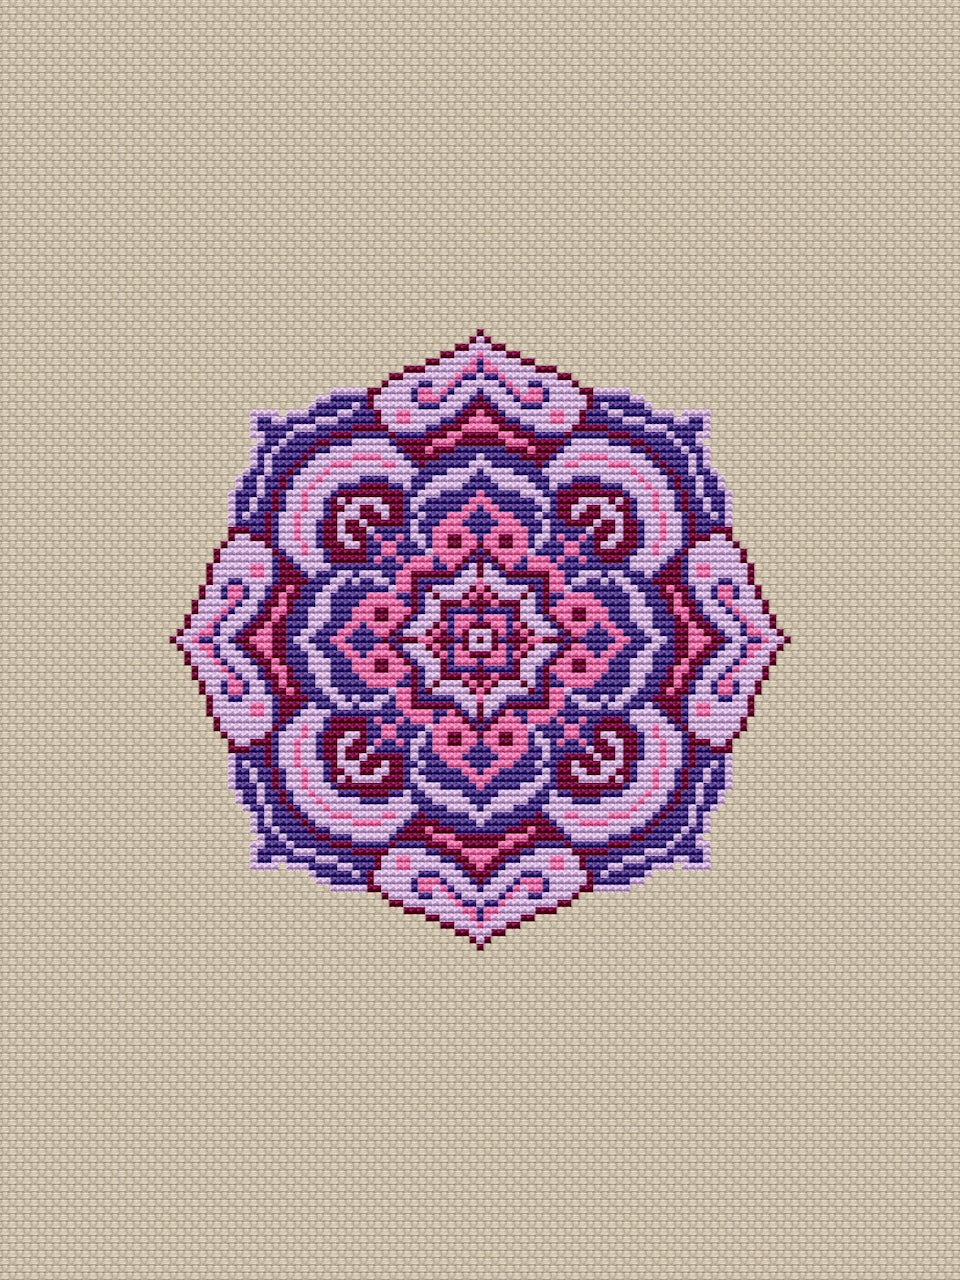 Zen cross stitch